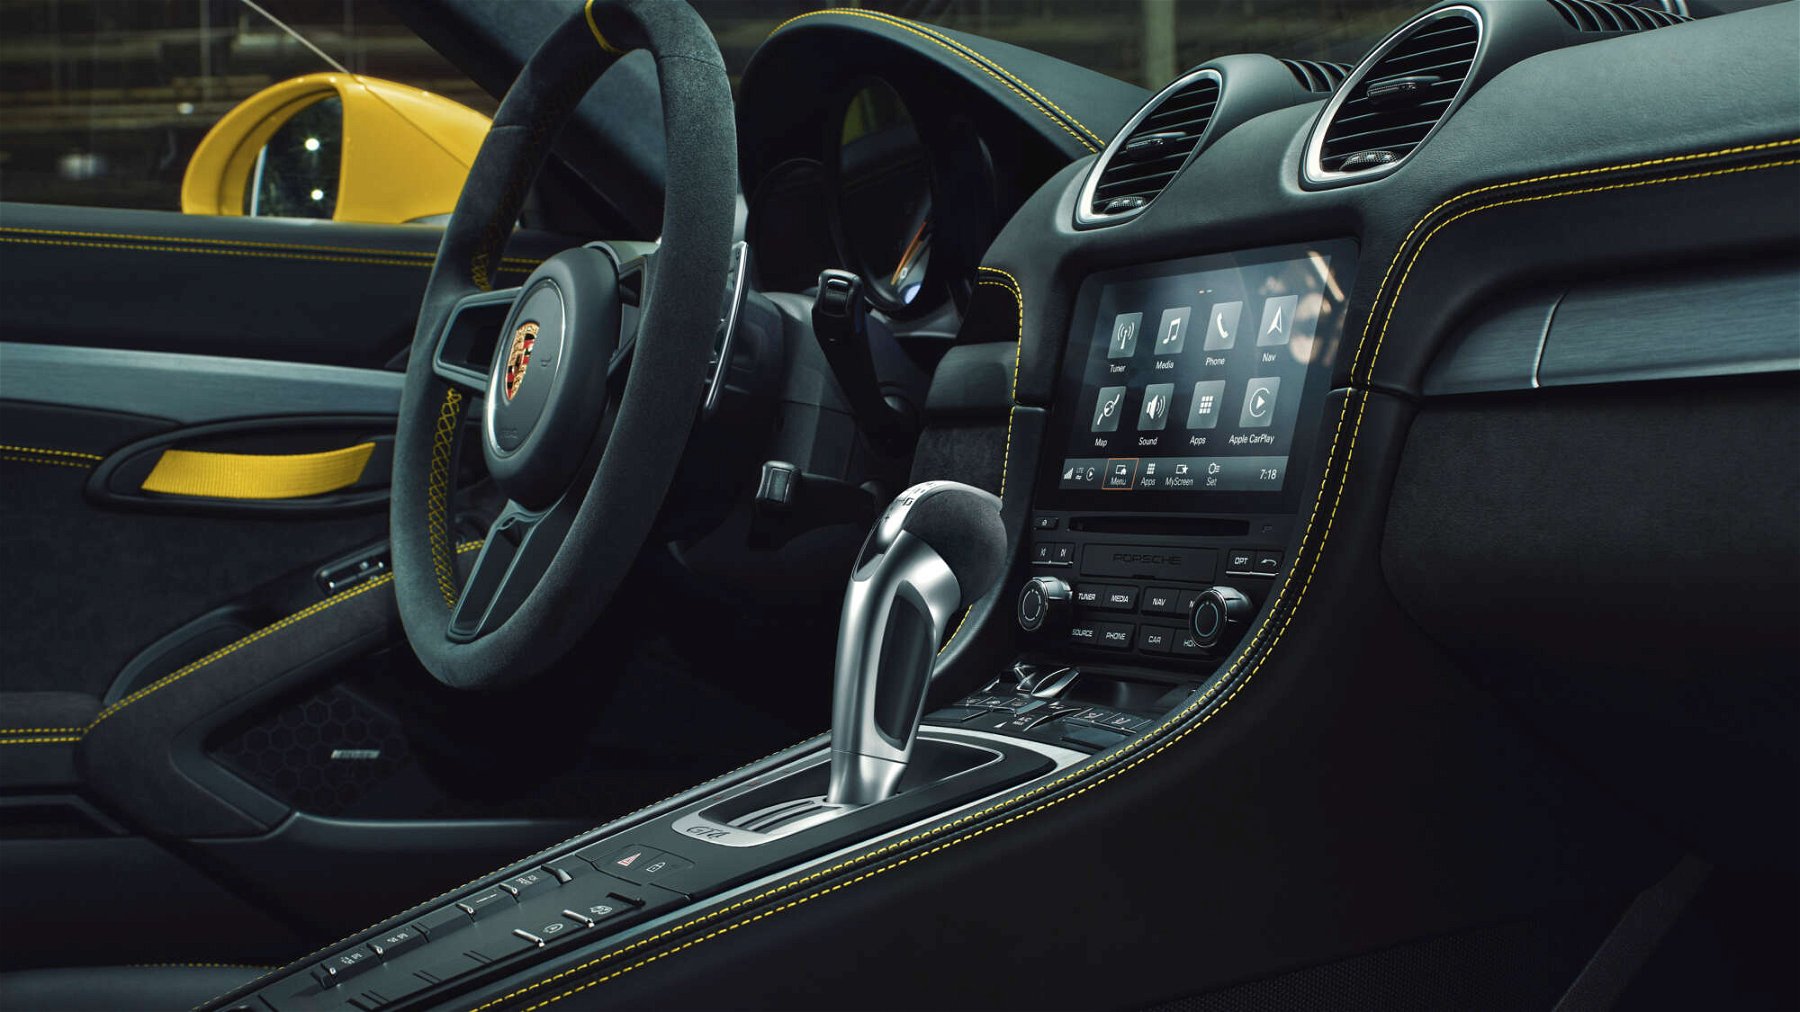 Porsche dual-clutch transmission – PDK